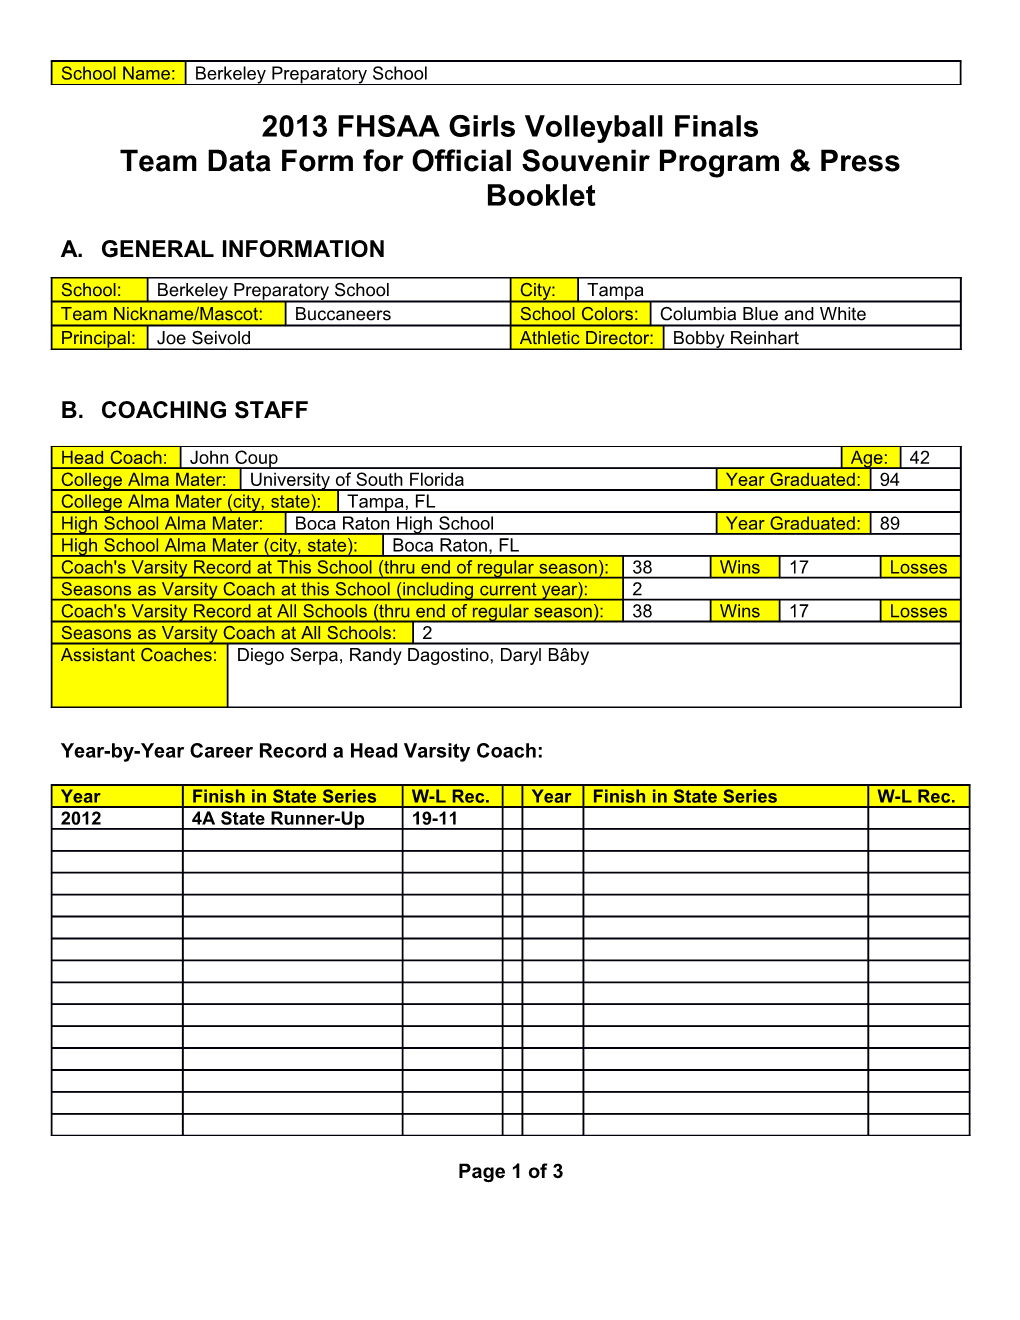 Team Data Form for Official Souvenir Program & Press Booklet s5